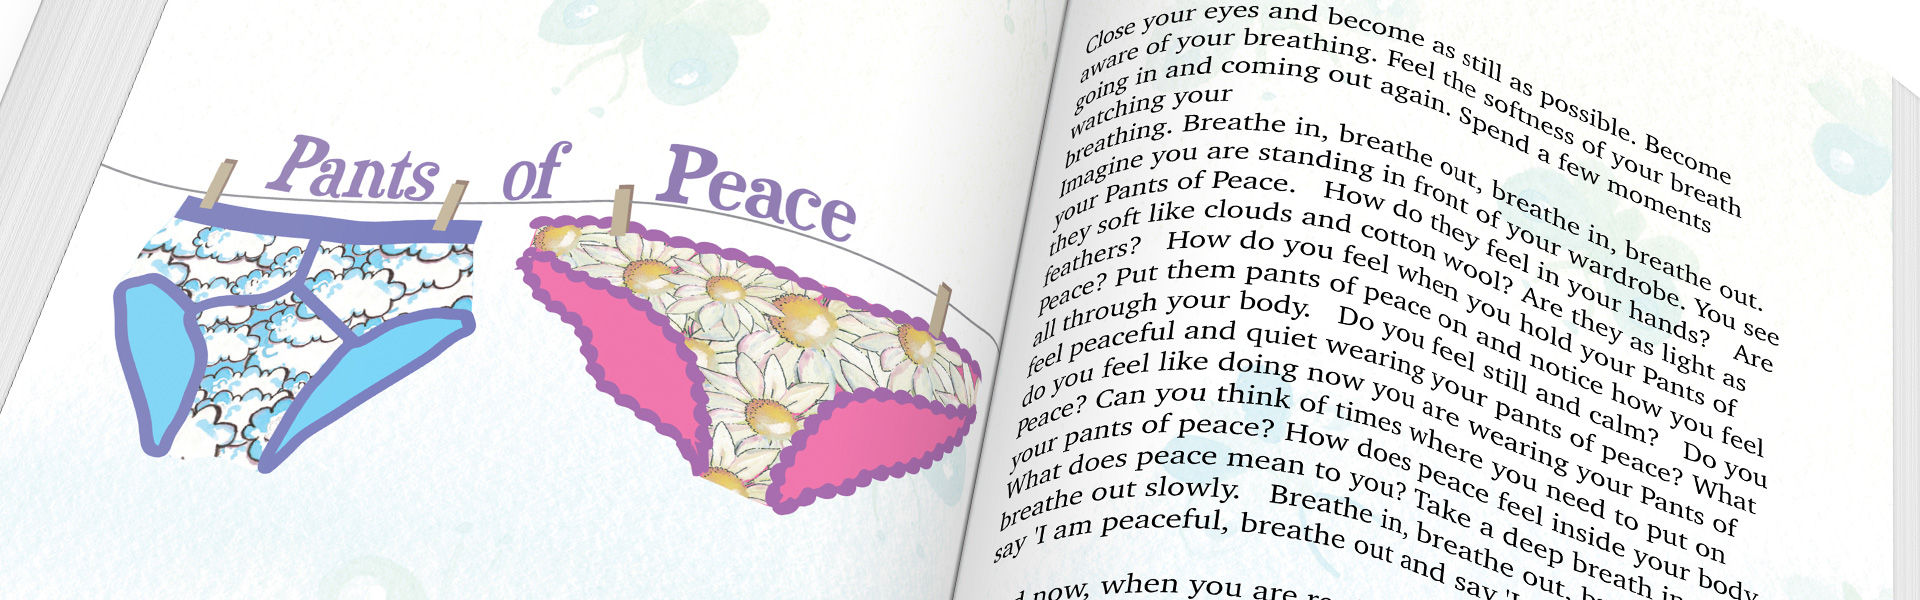 Pants of Peace book by Marneta Viegas